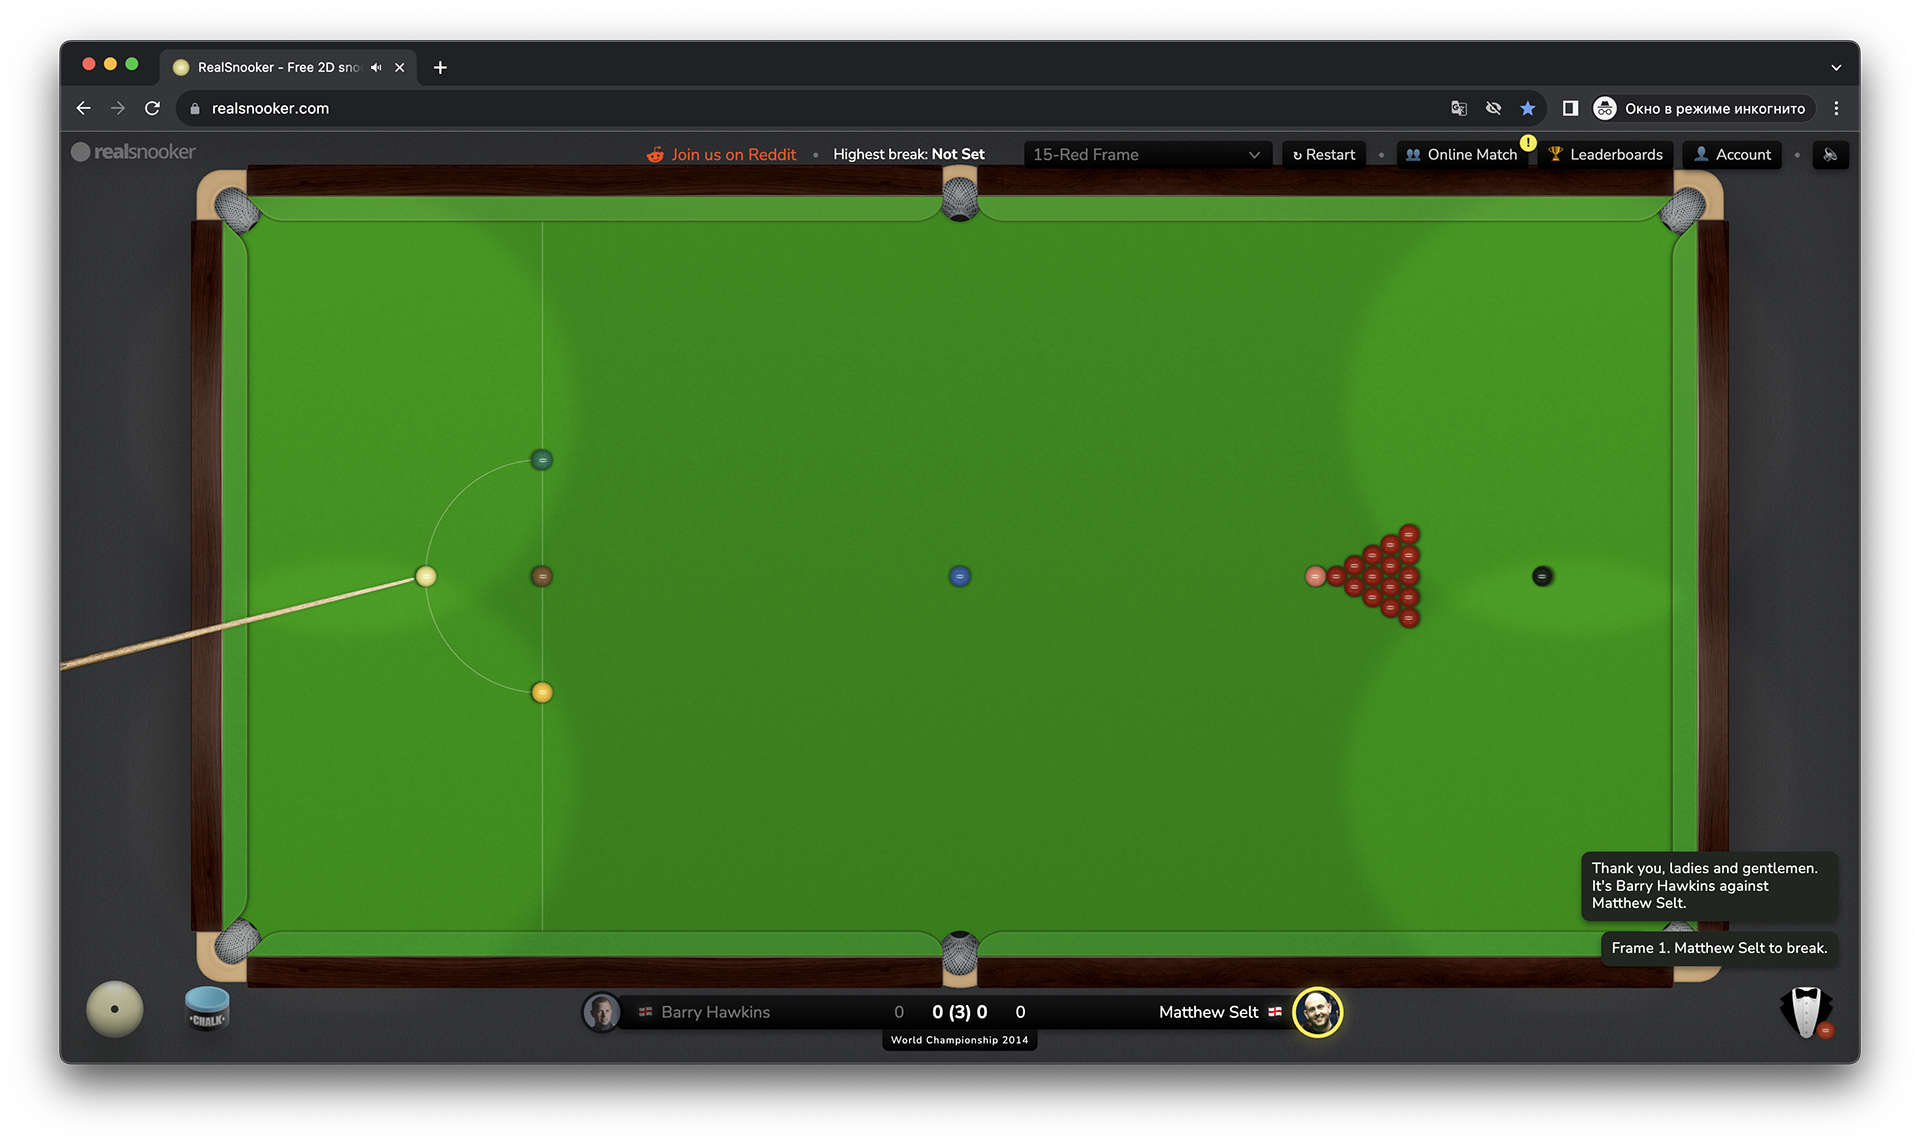 snooker browser game